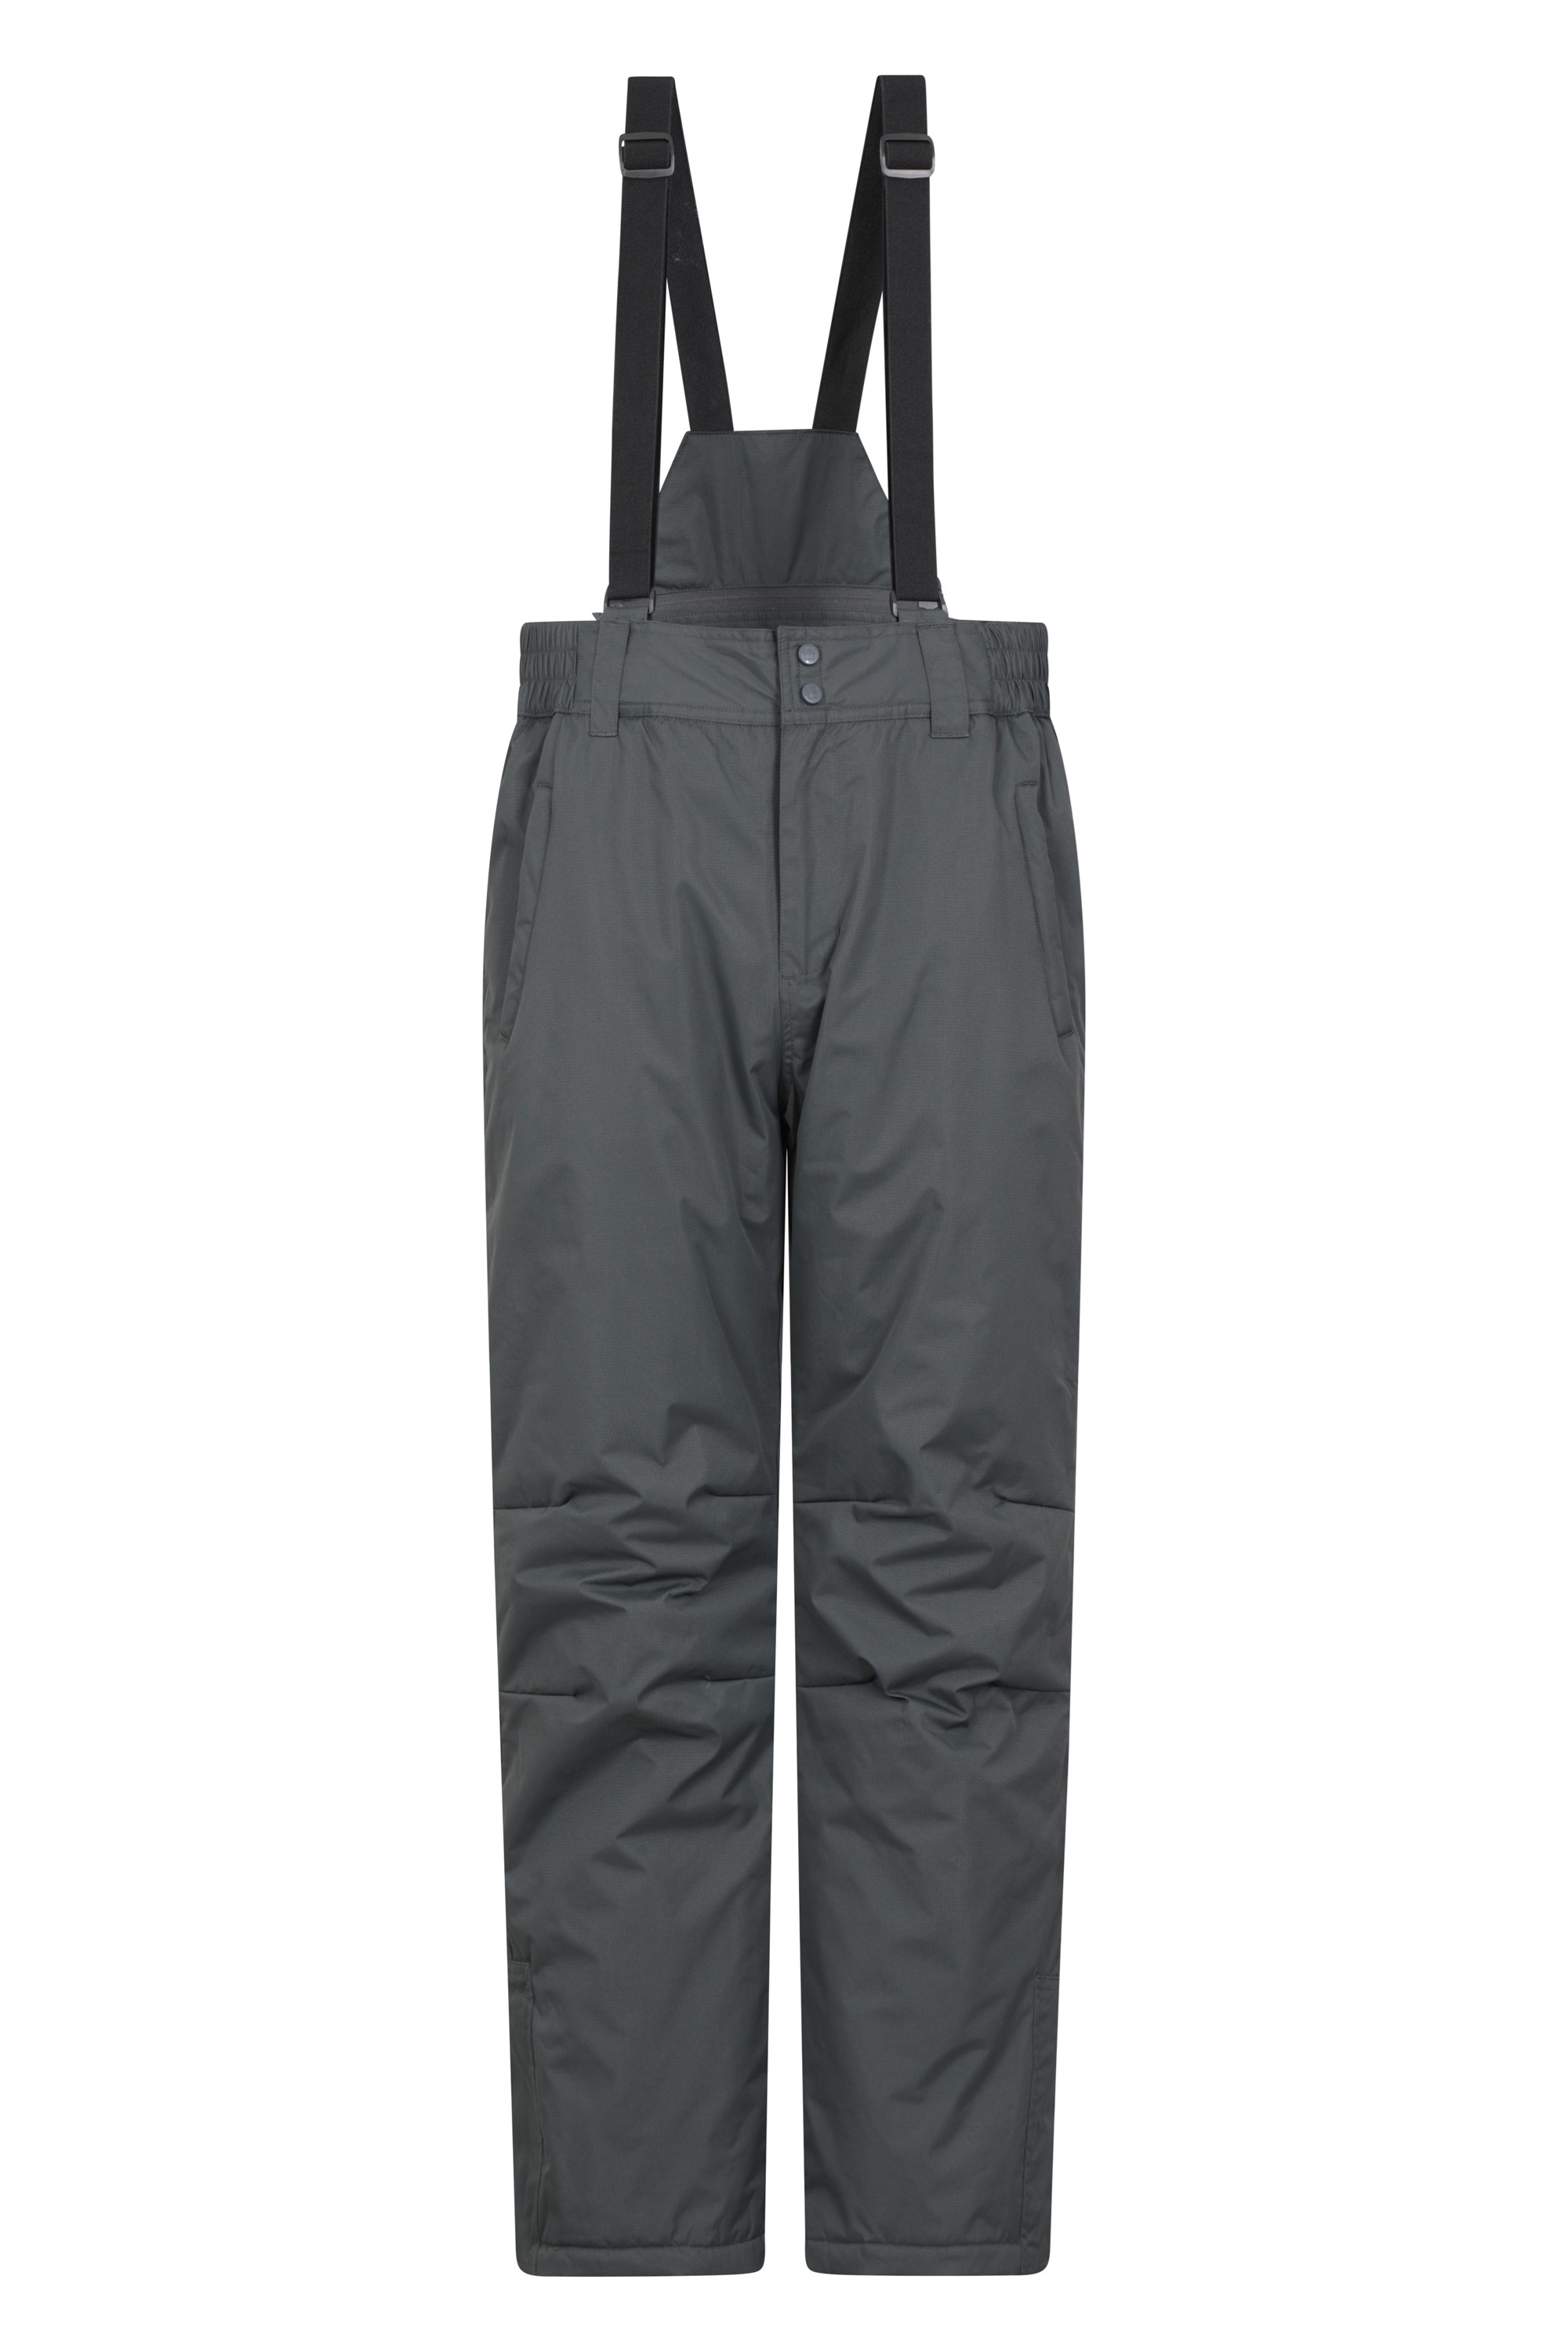 Pantalón de Secado rápido Mountain Warehouse Sobrepantalón Impermeable Pakka para Hombre pantalón con Costuras termoselladas para Viajar en Cualquier época del año 